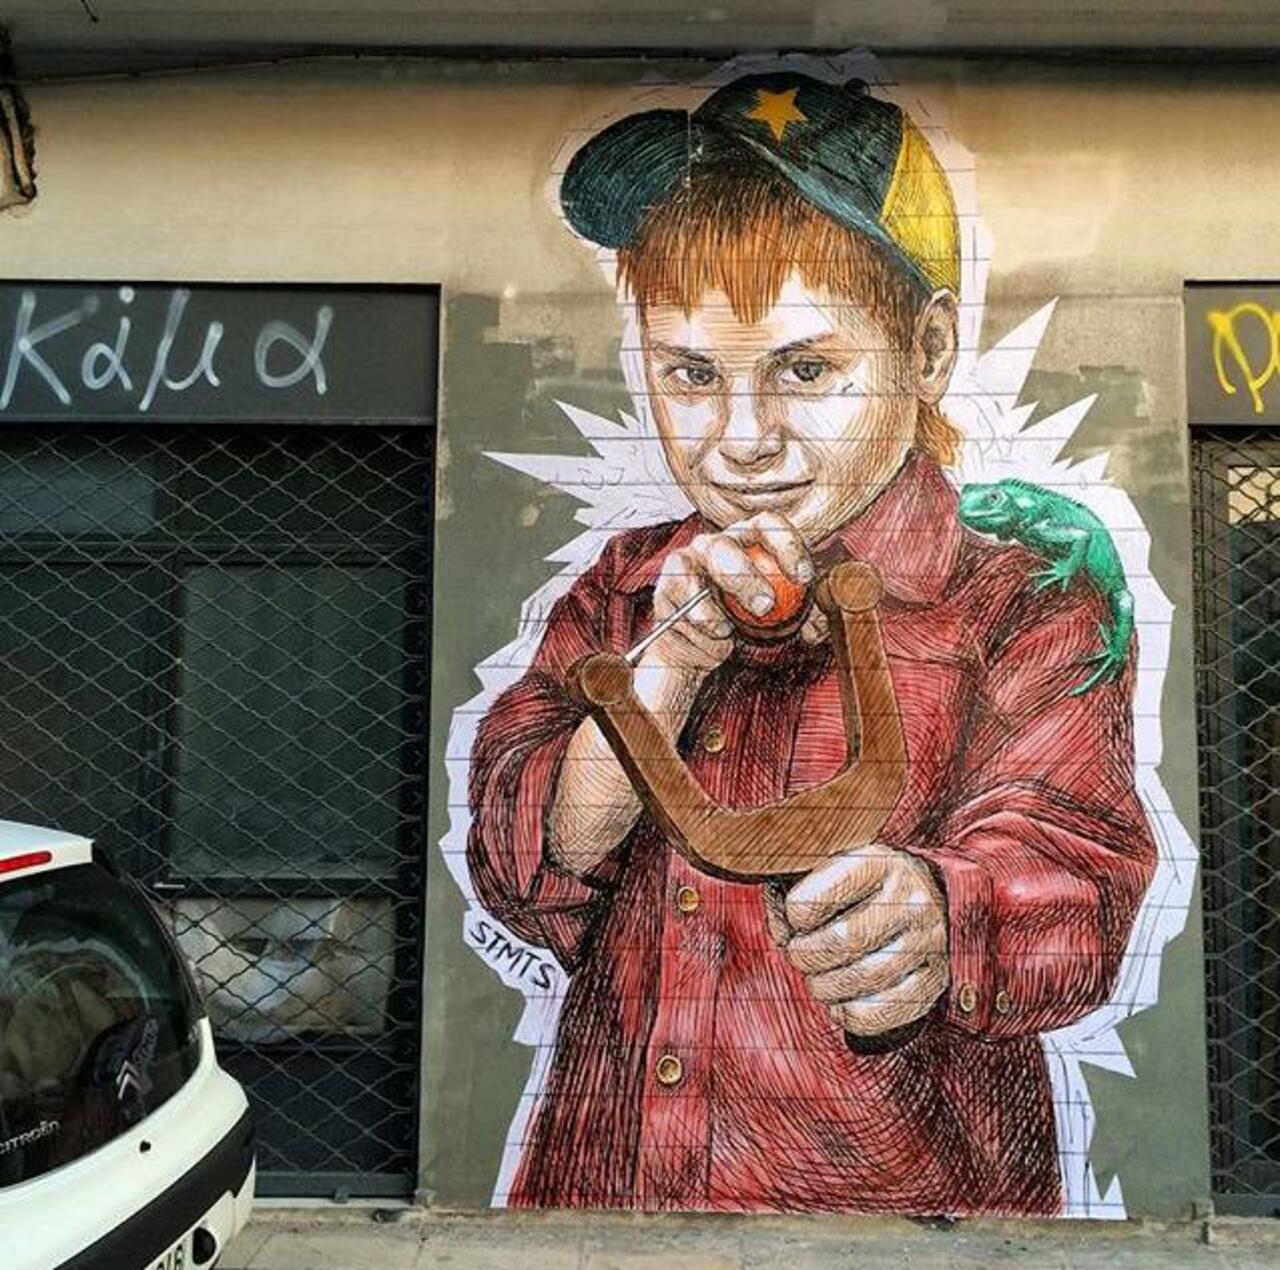 Street Art by STMTS in Athens

#art #graffiti #mural #streetart http://t.co/ljE4IJi66p